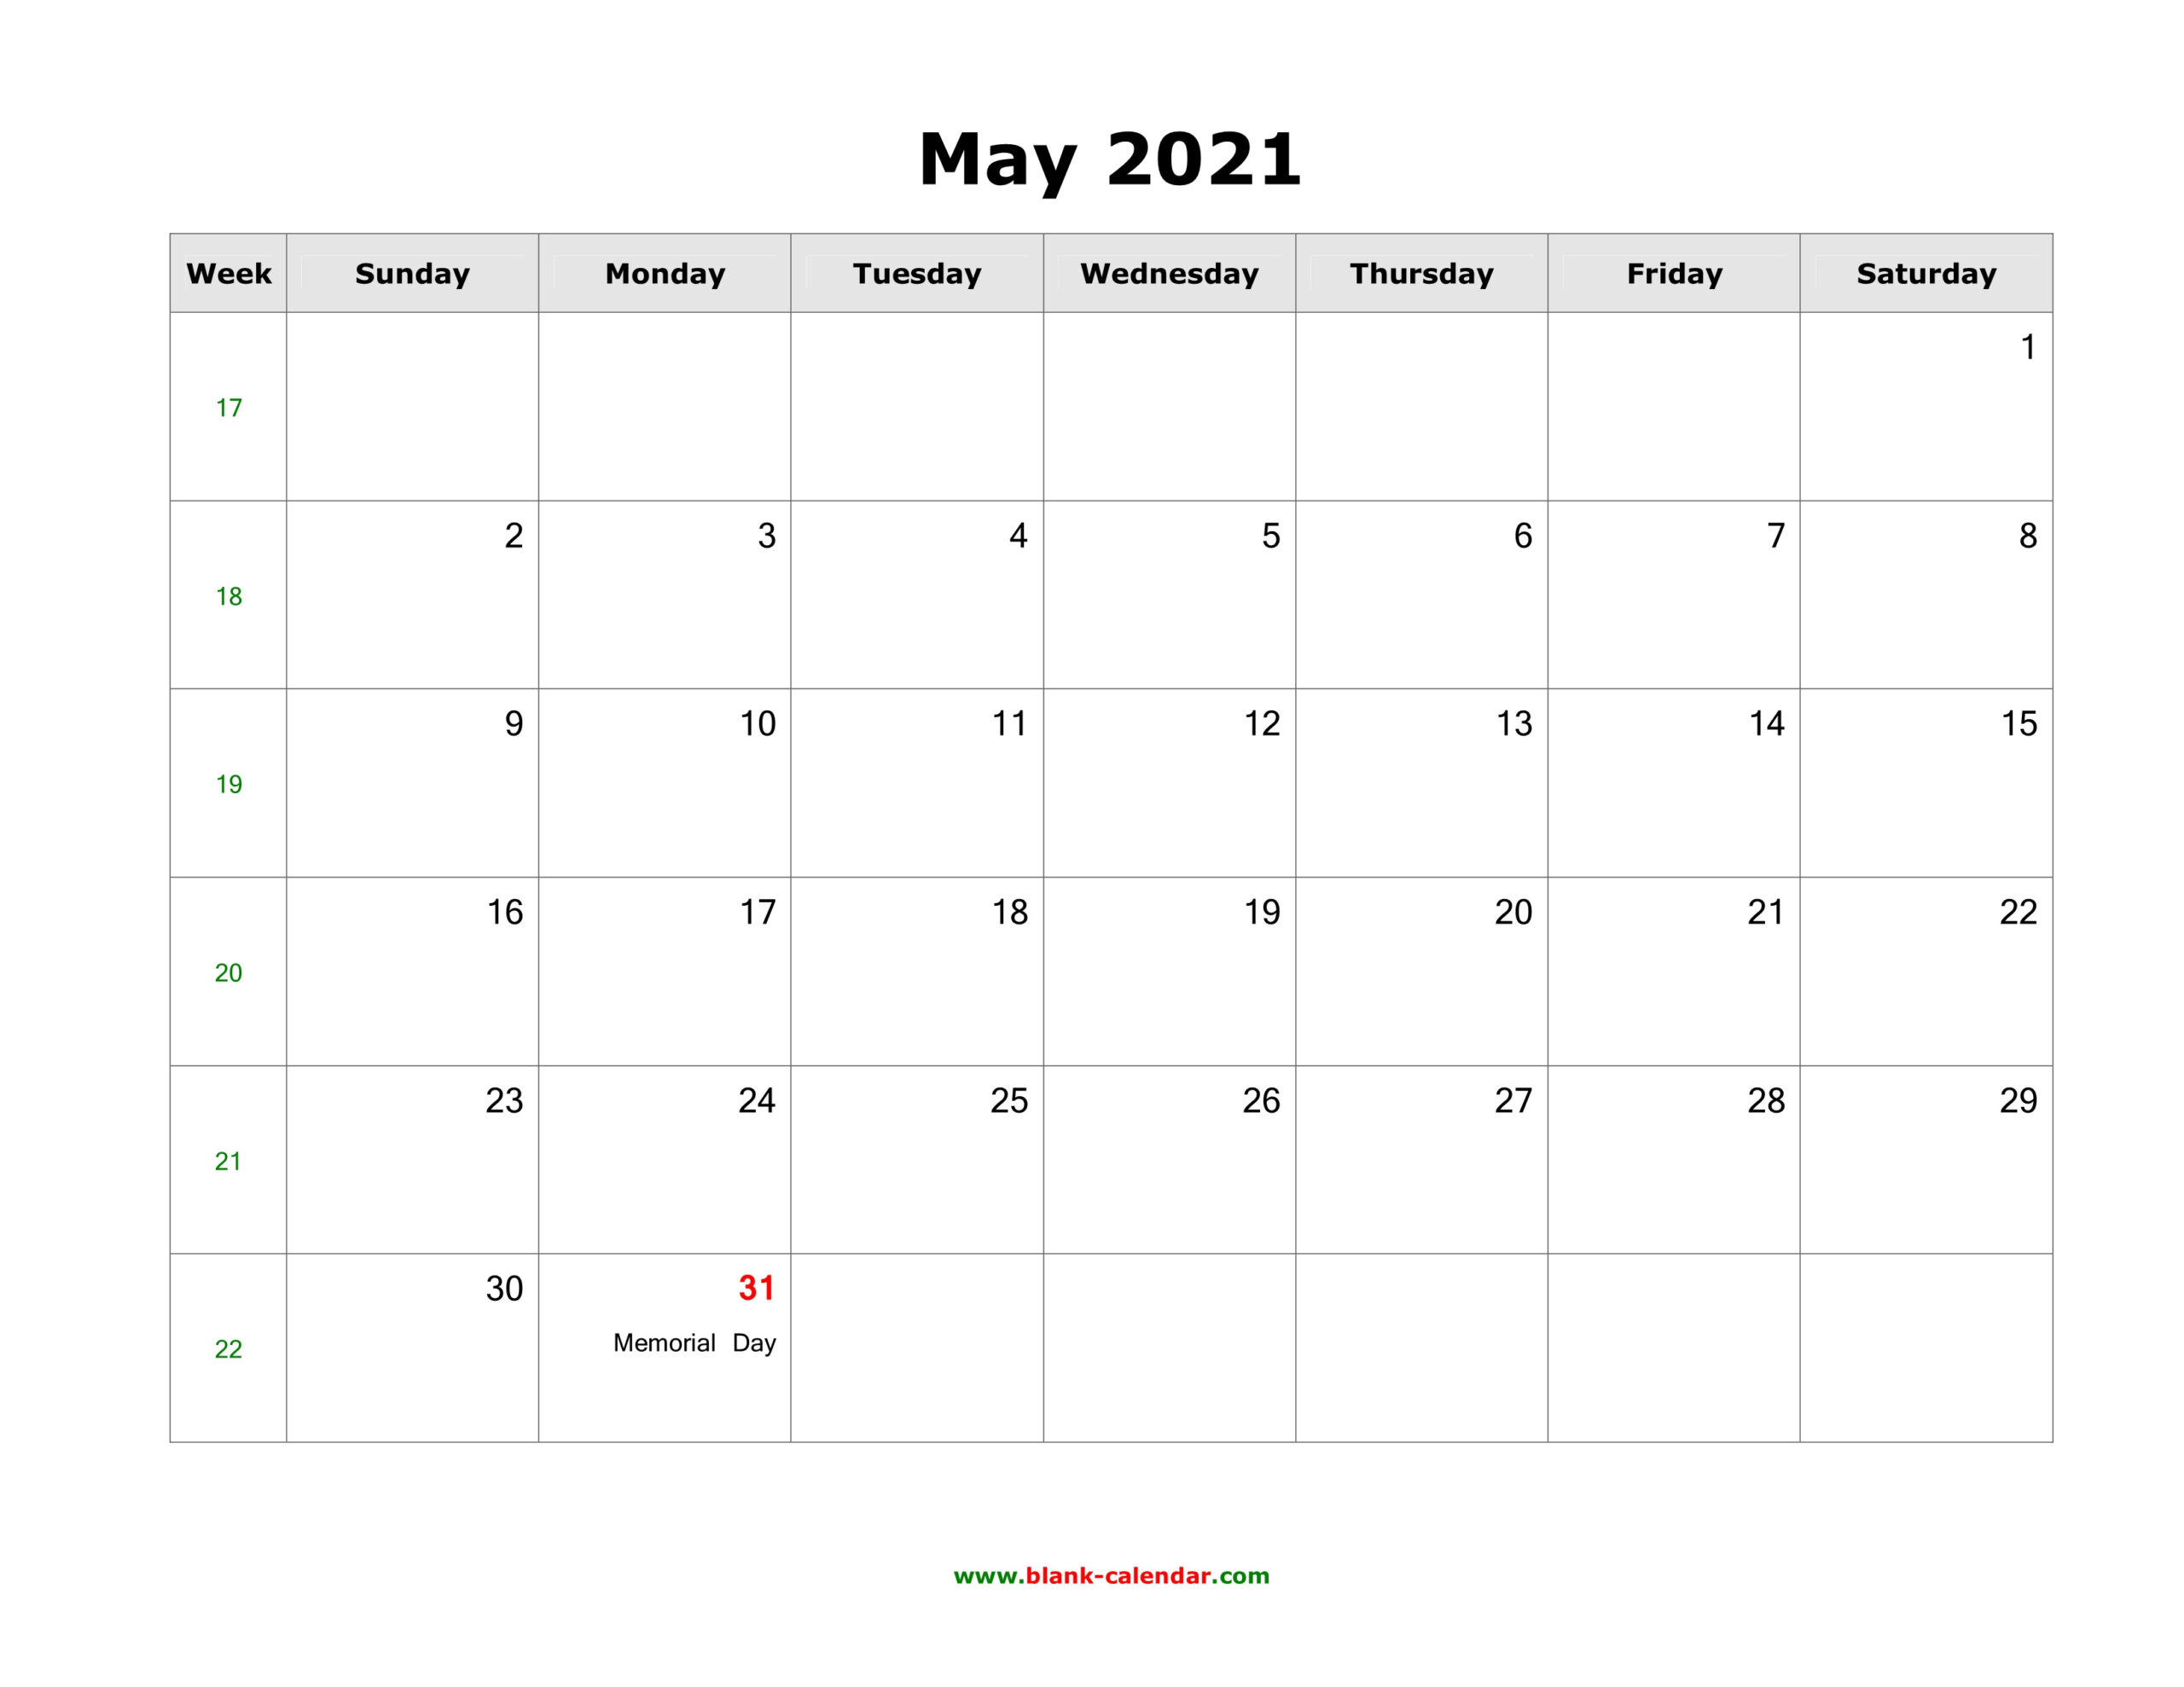 May 2021 Blank Calendar | Free Download Calendar Templates-May 2021 Calendar Printable Bill